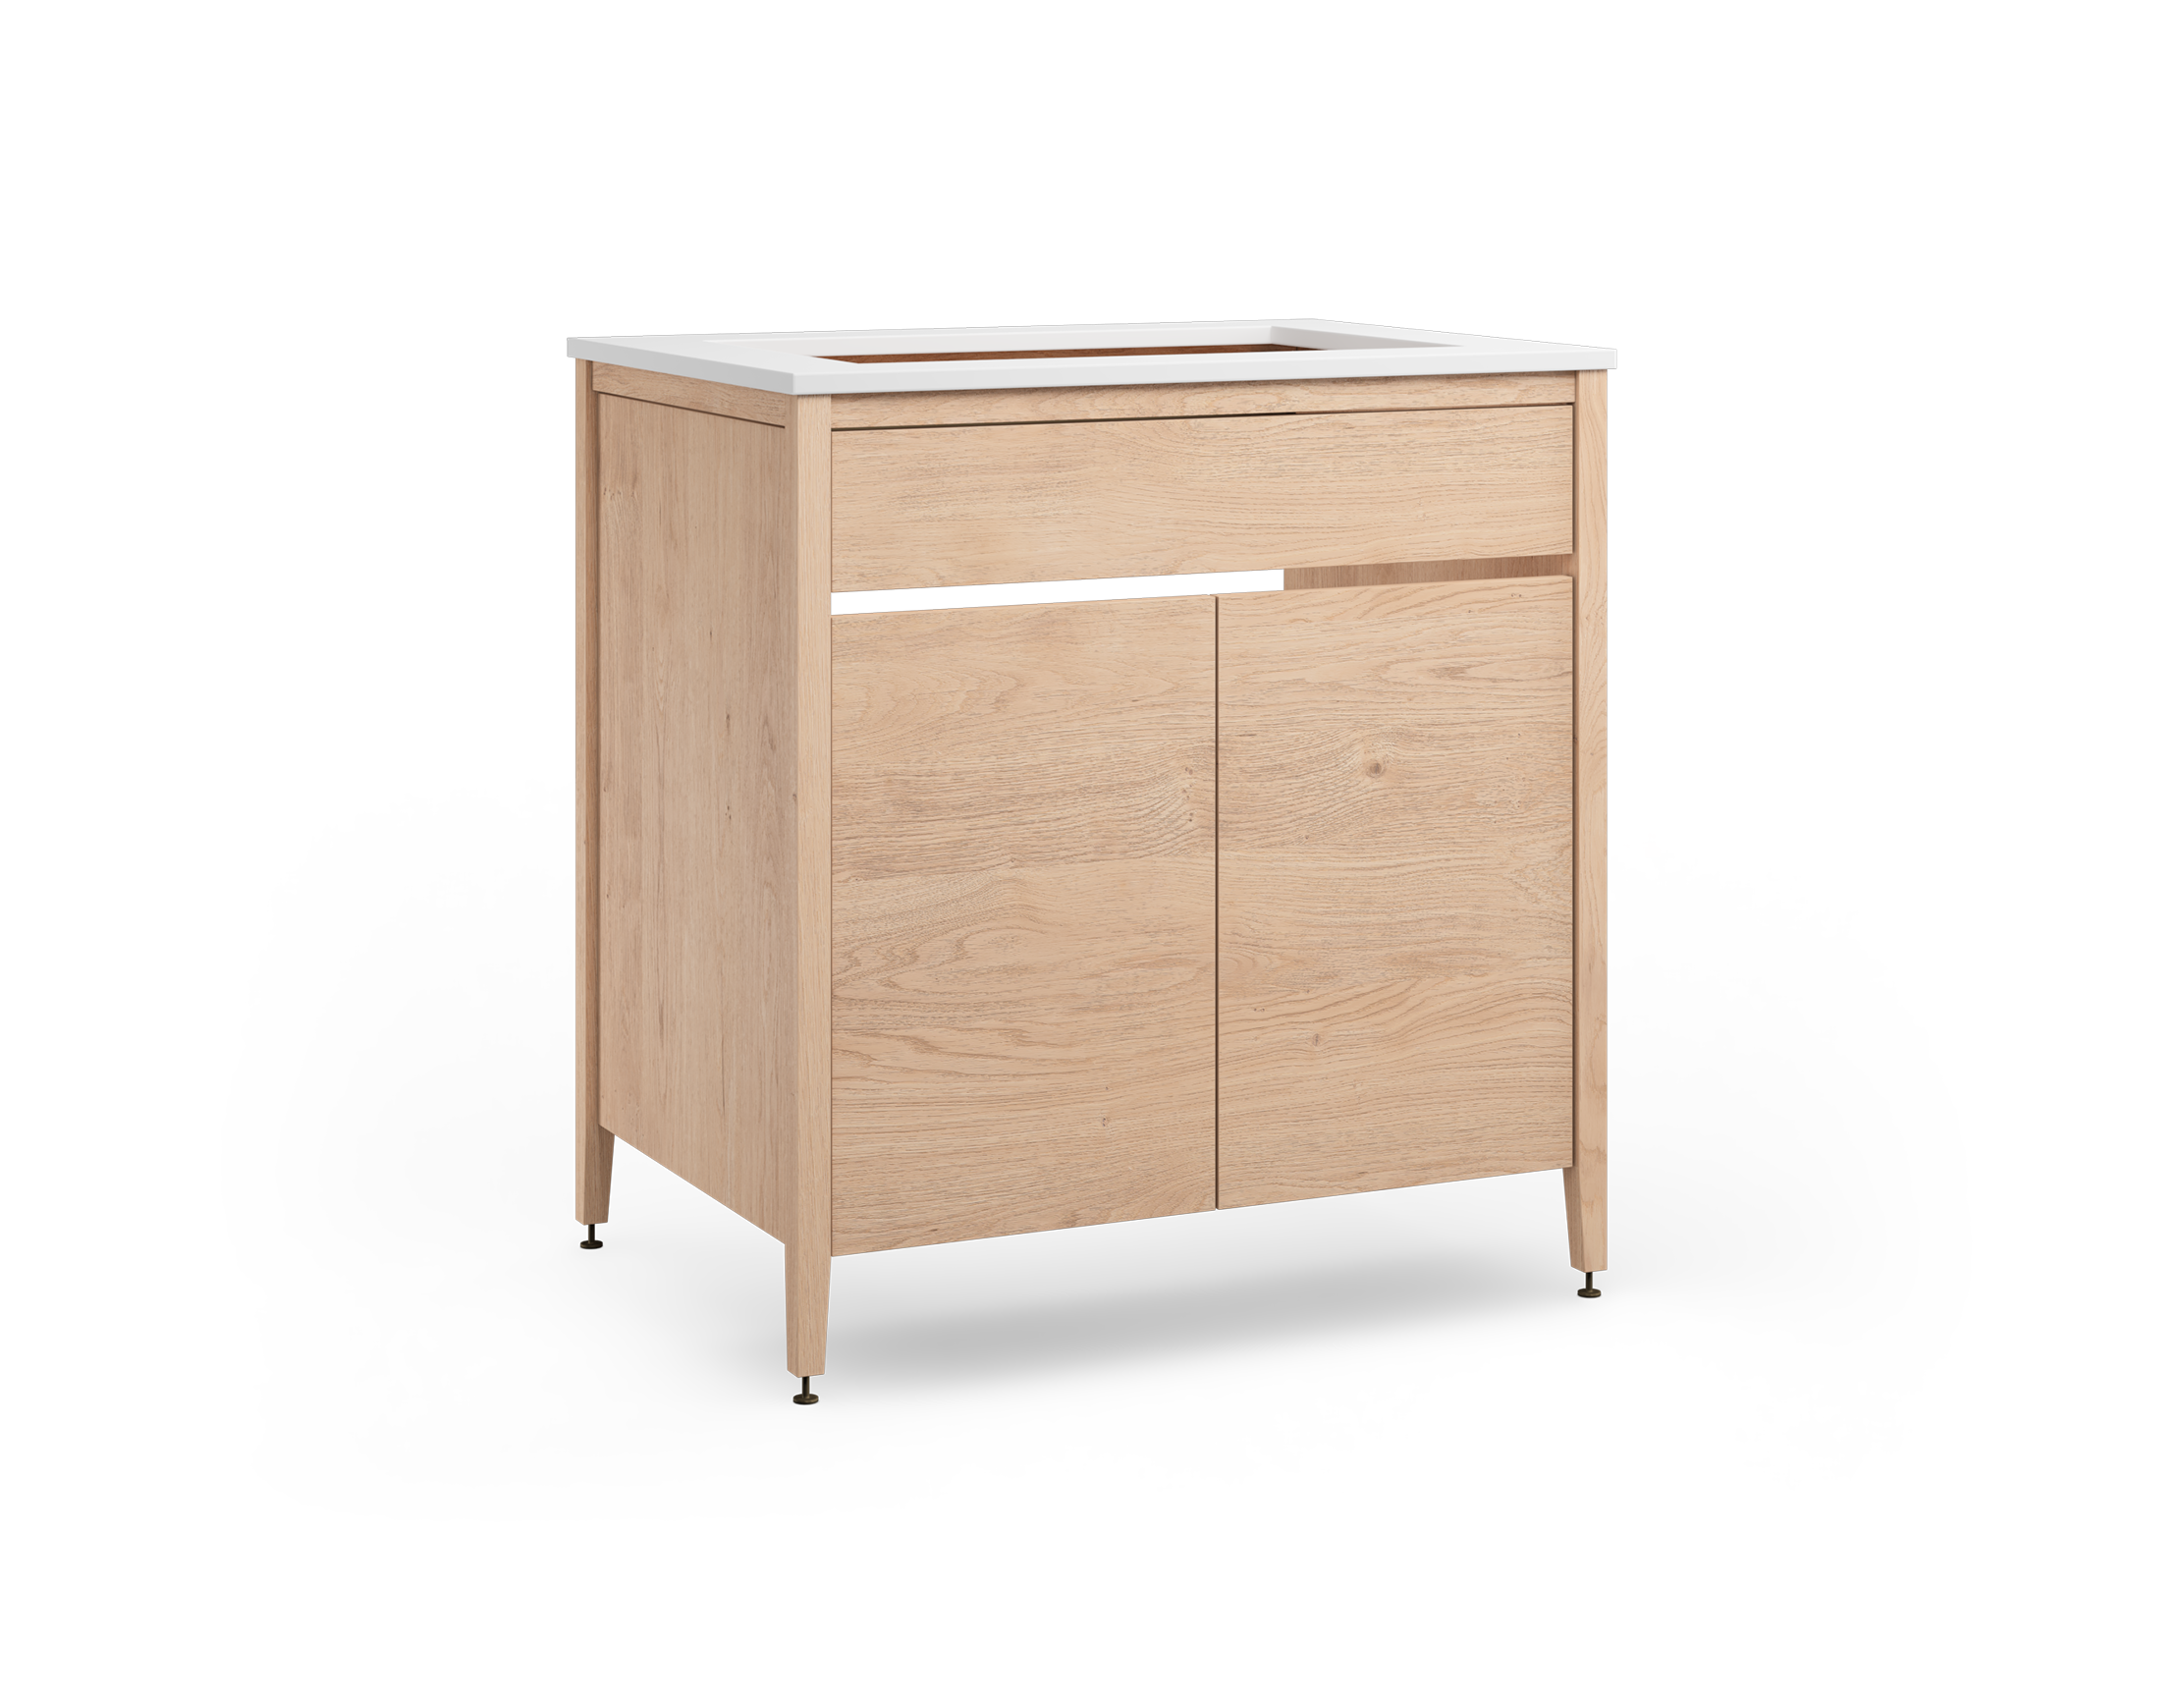 All wood Radix cabinet